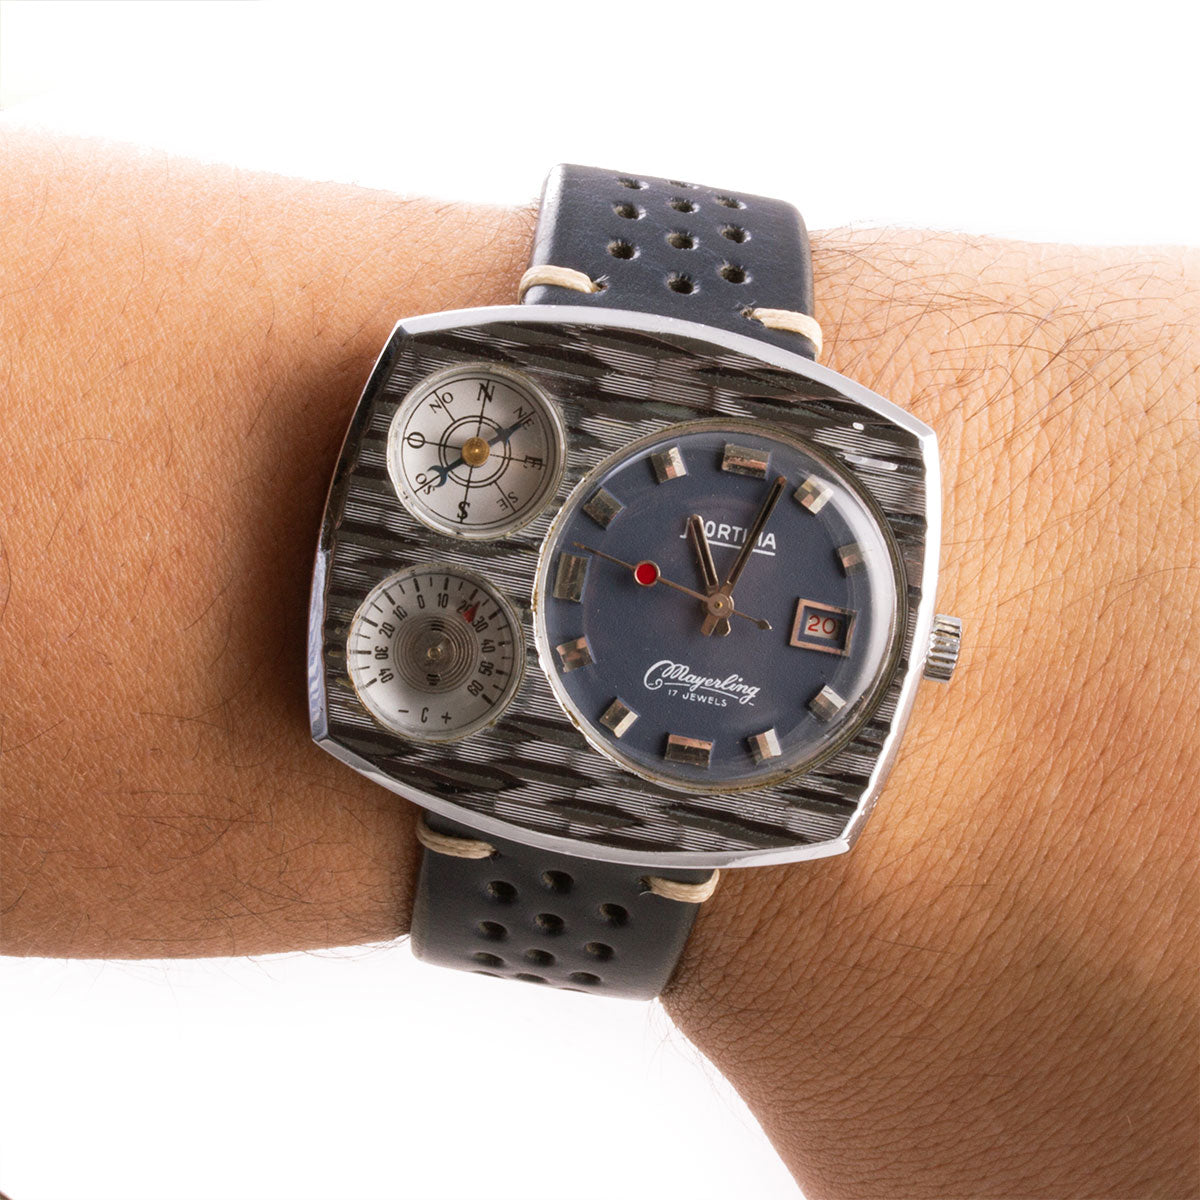 Second-hand watch - Mortima - 1200€